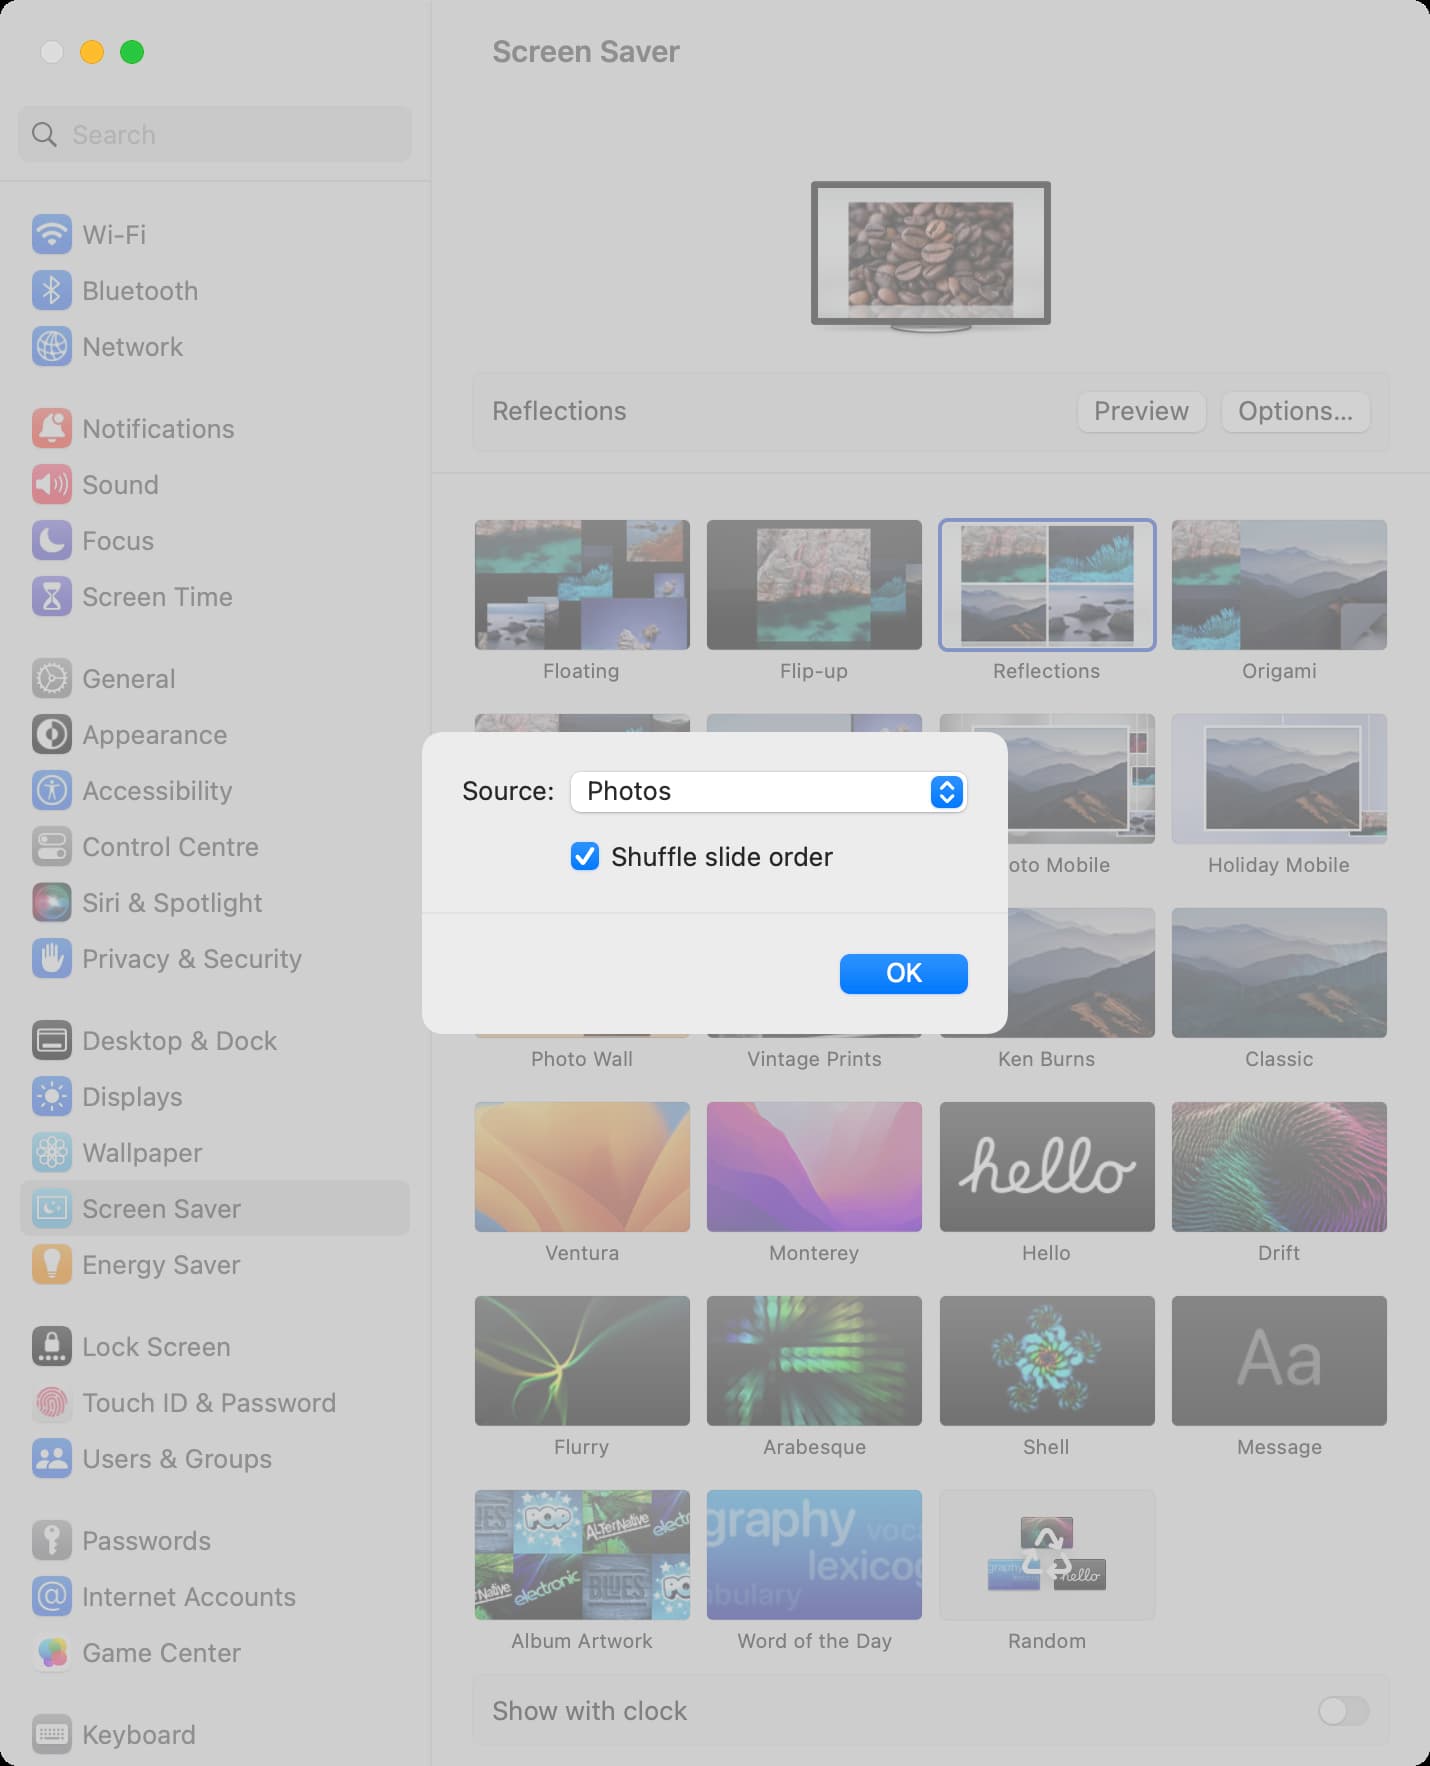 Shuffle slide order photos as screen saver on Mac